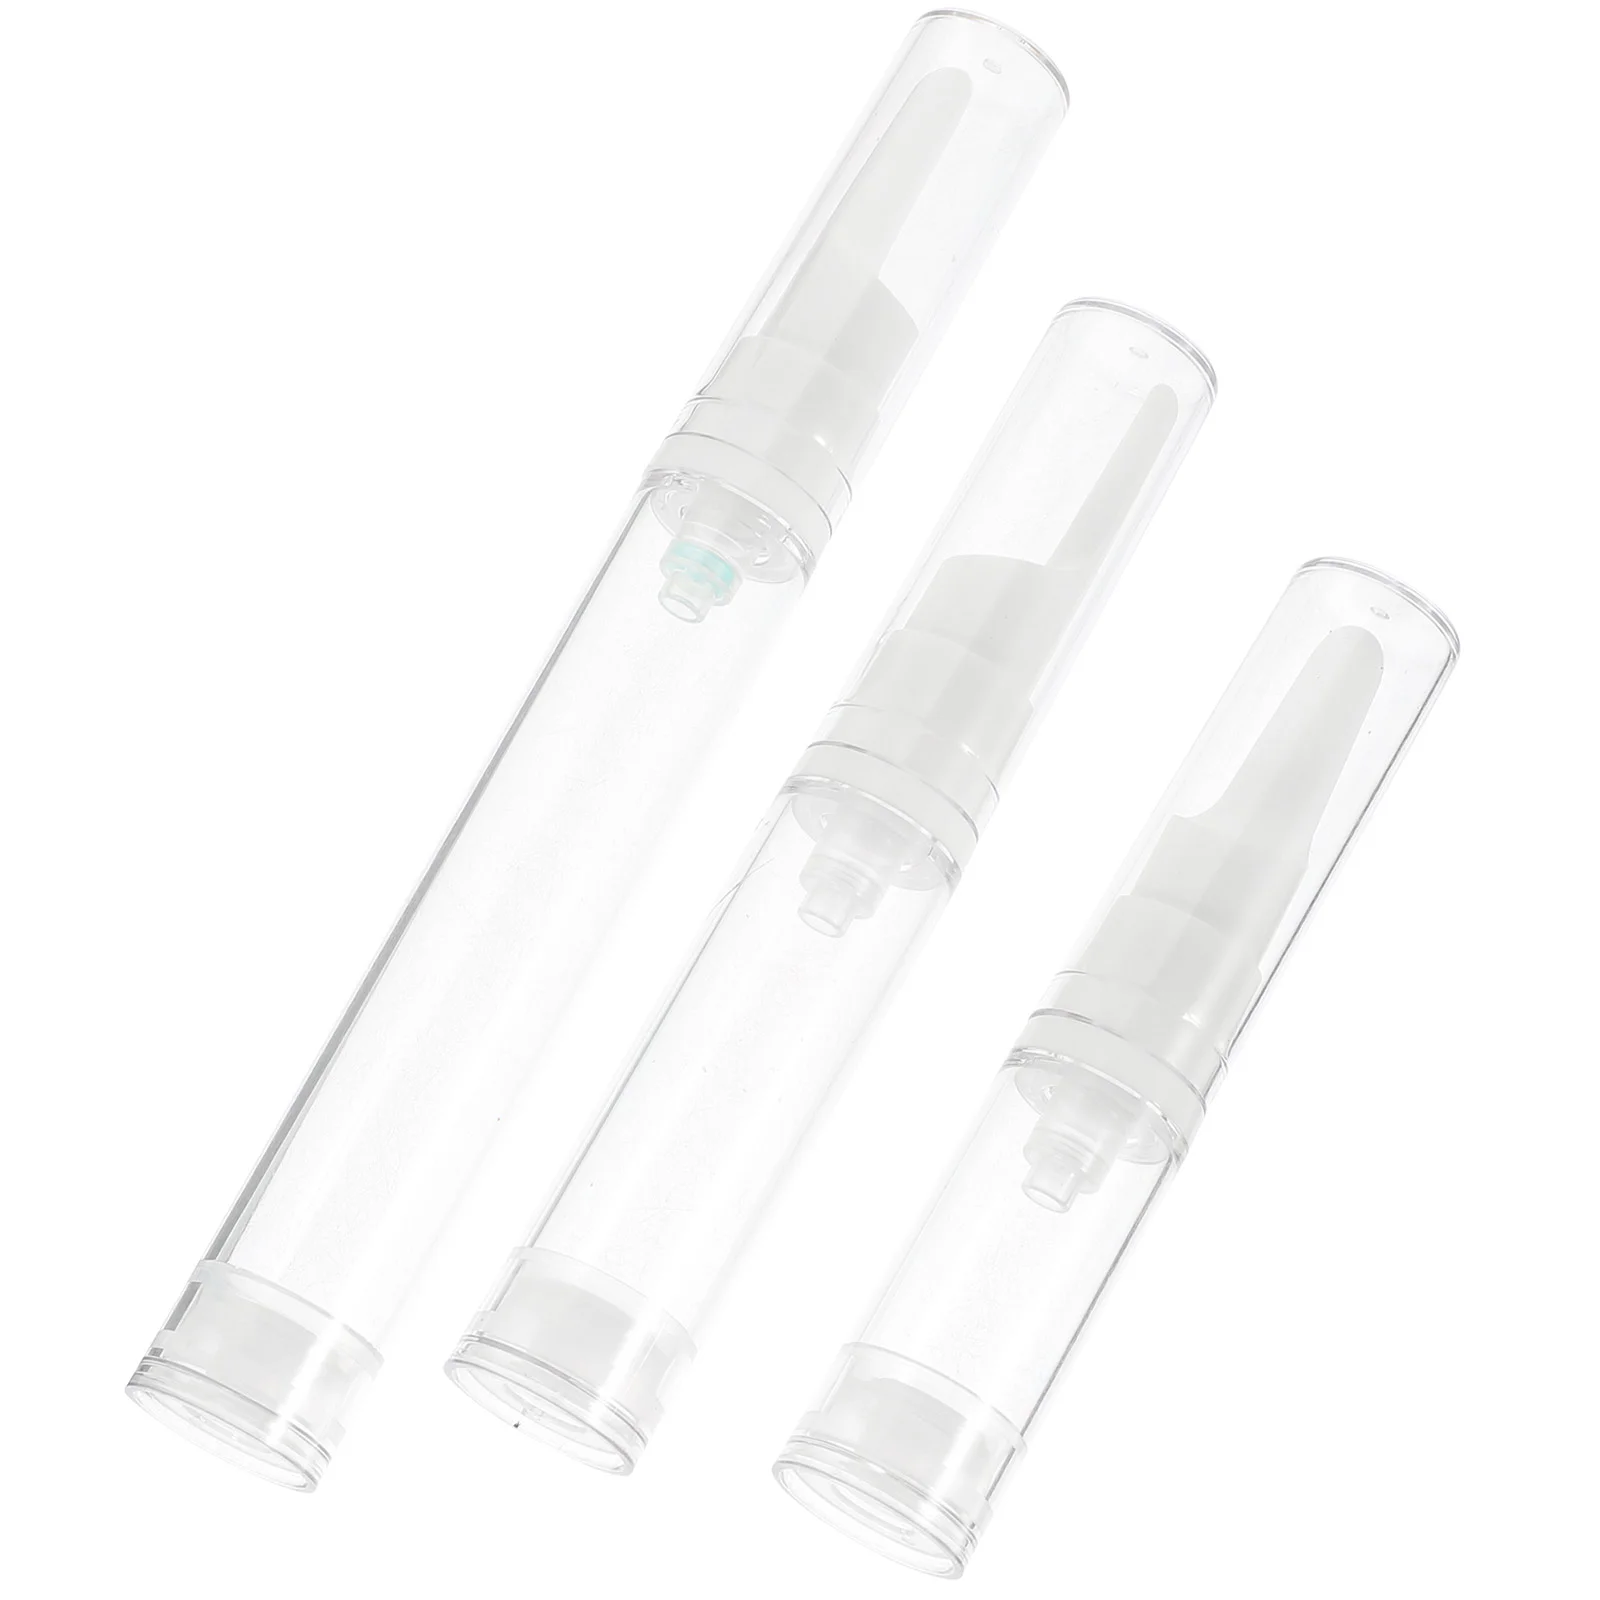 

15 Pcs Cream Jar Vacuum Bottle Dispenser Airless Pump Moisturizer Container Empty Lotion Containers Eye Bottles